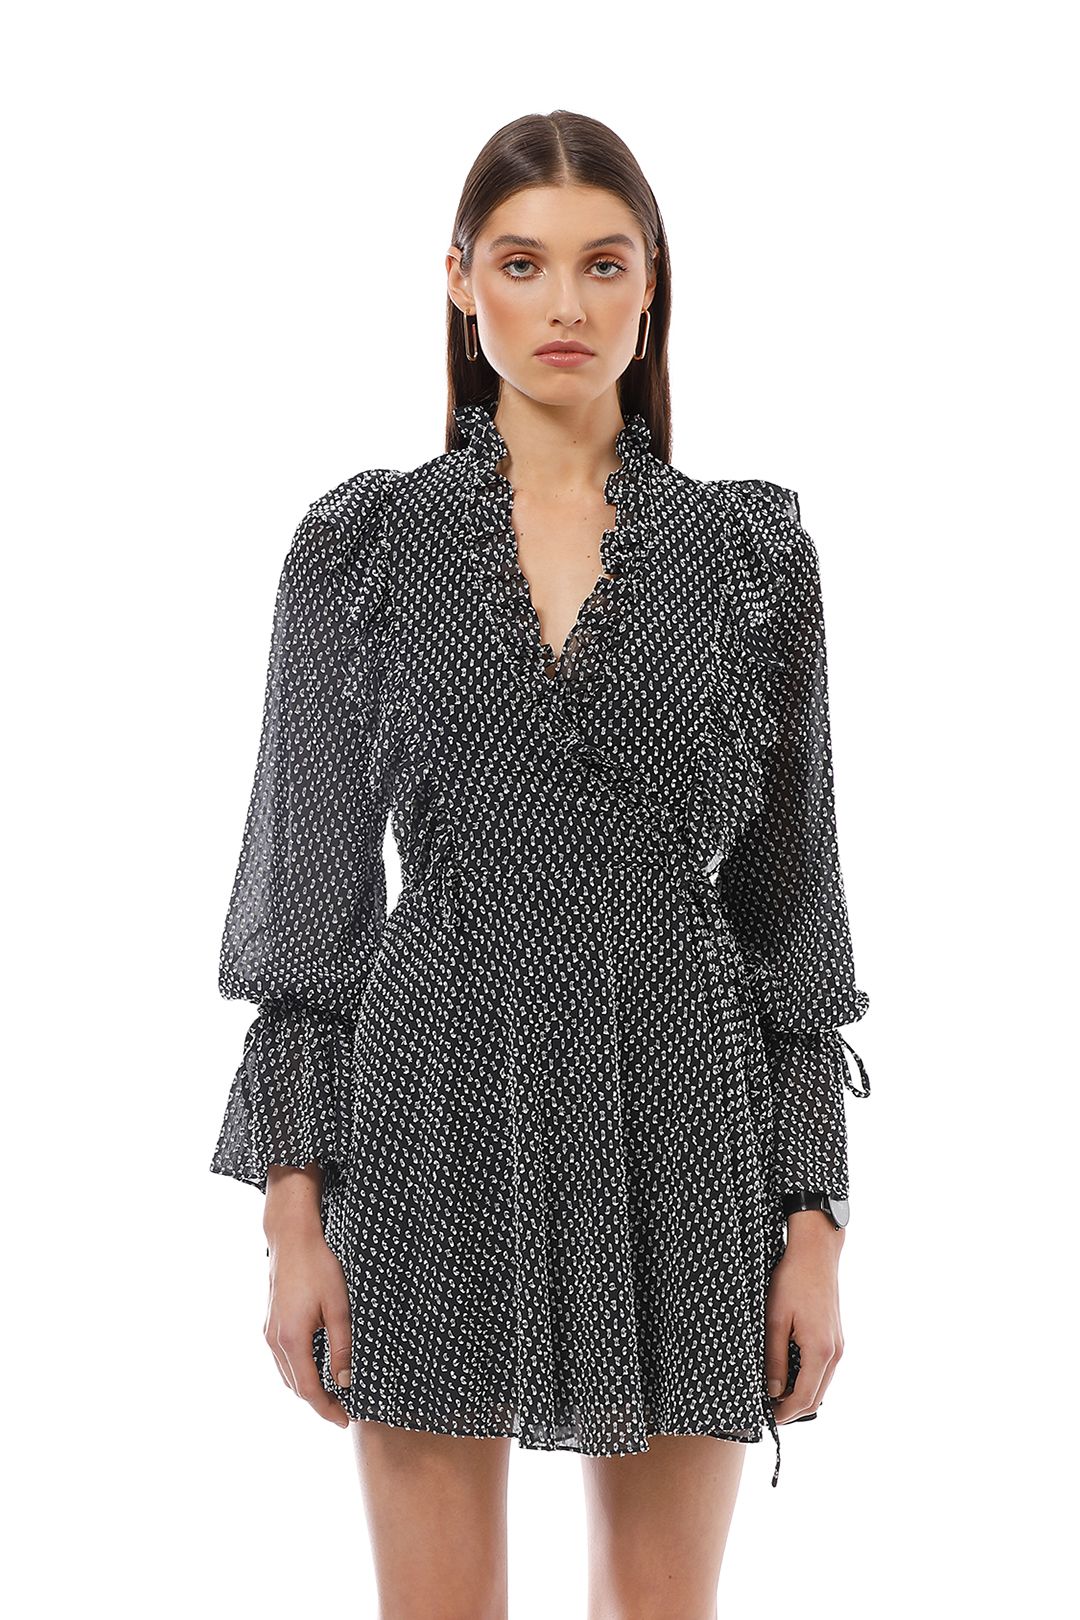 Shona Joy - Salinger Ruffle Mini Dress - Grey - Close Up